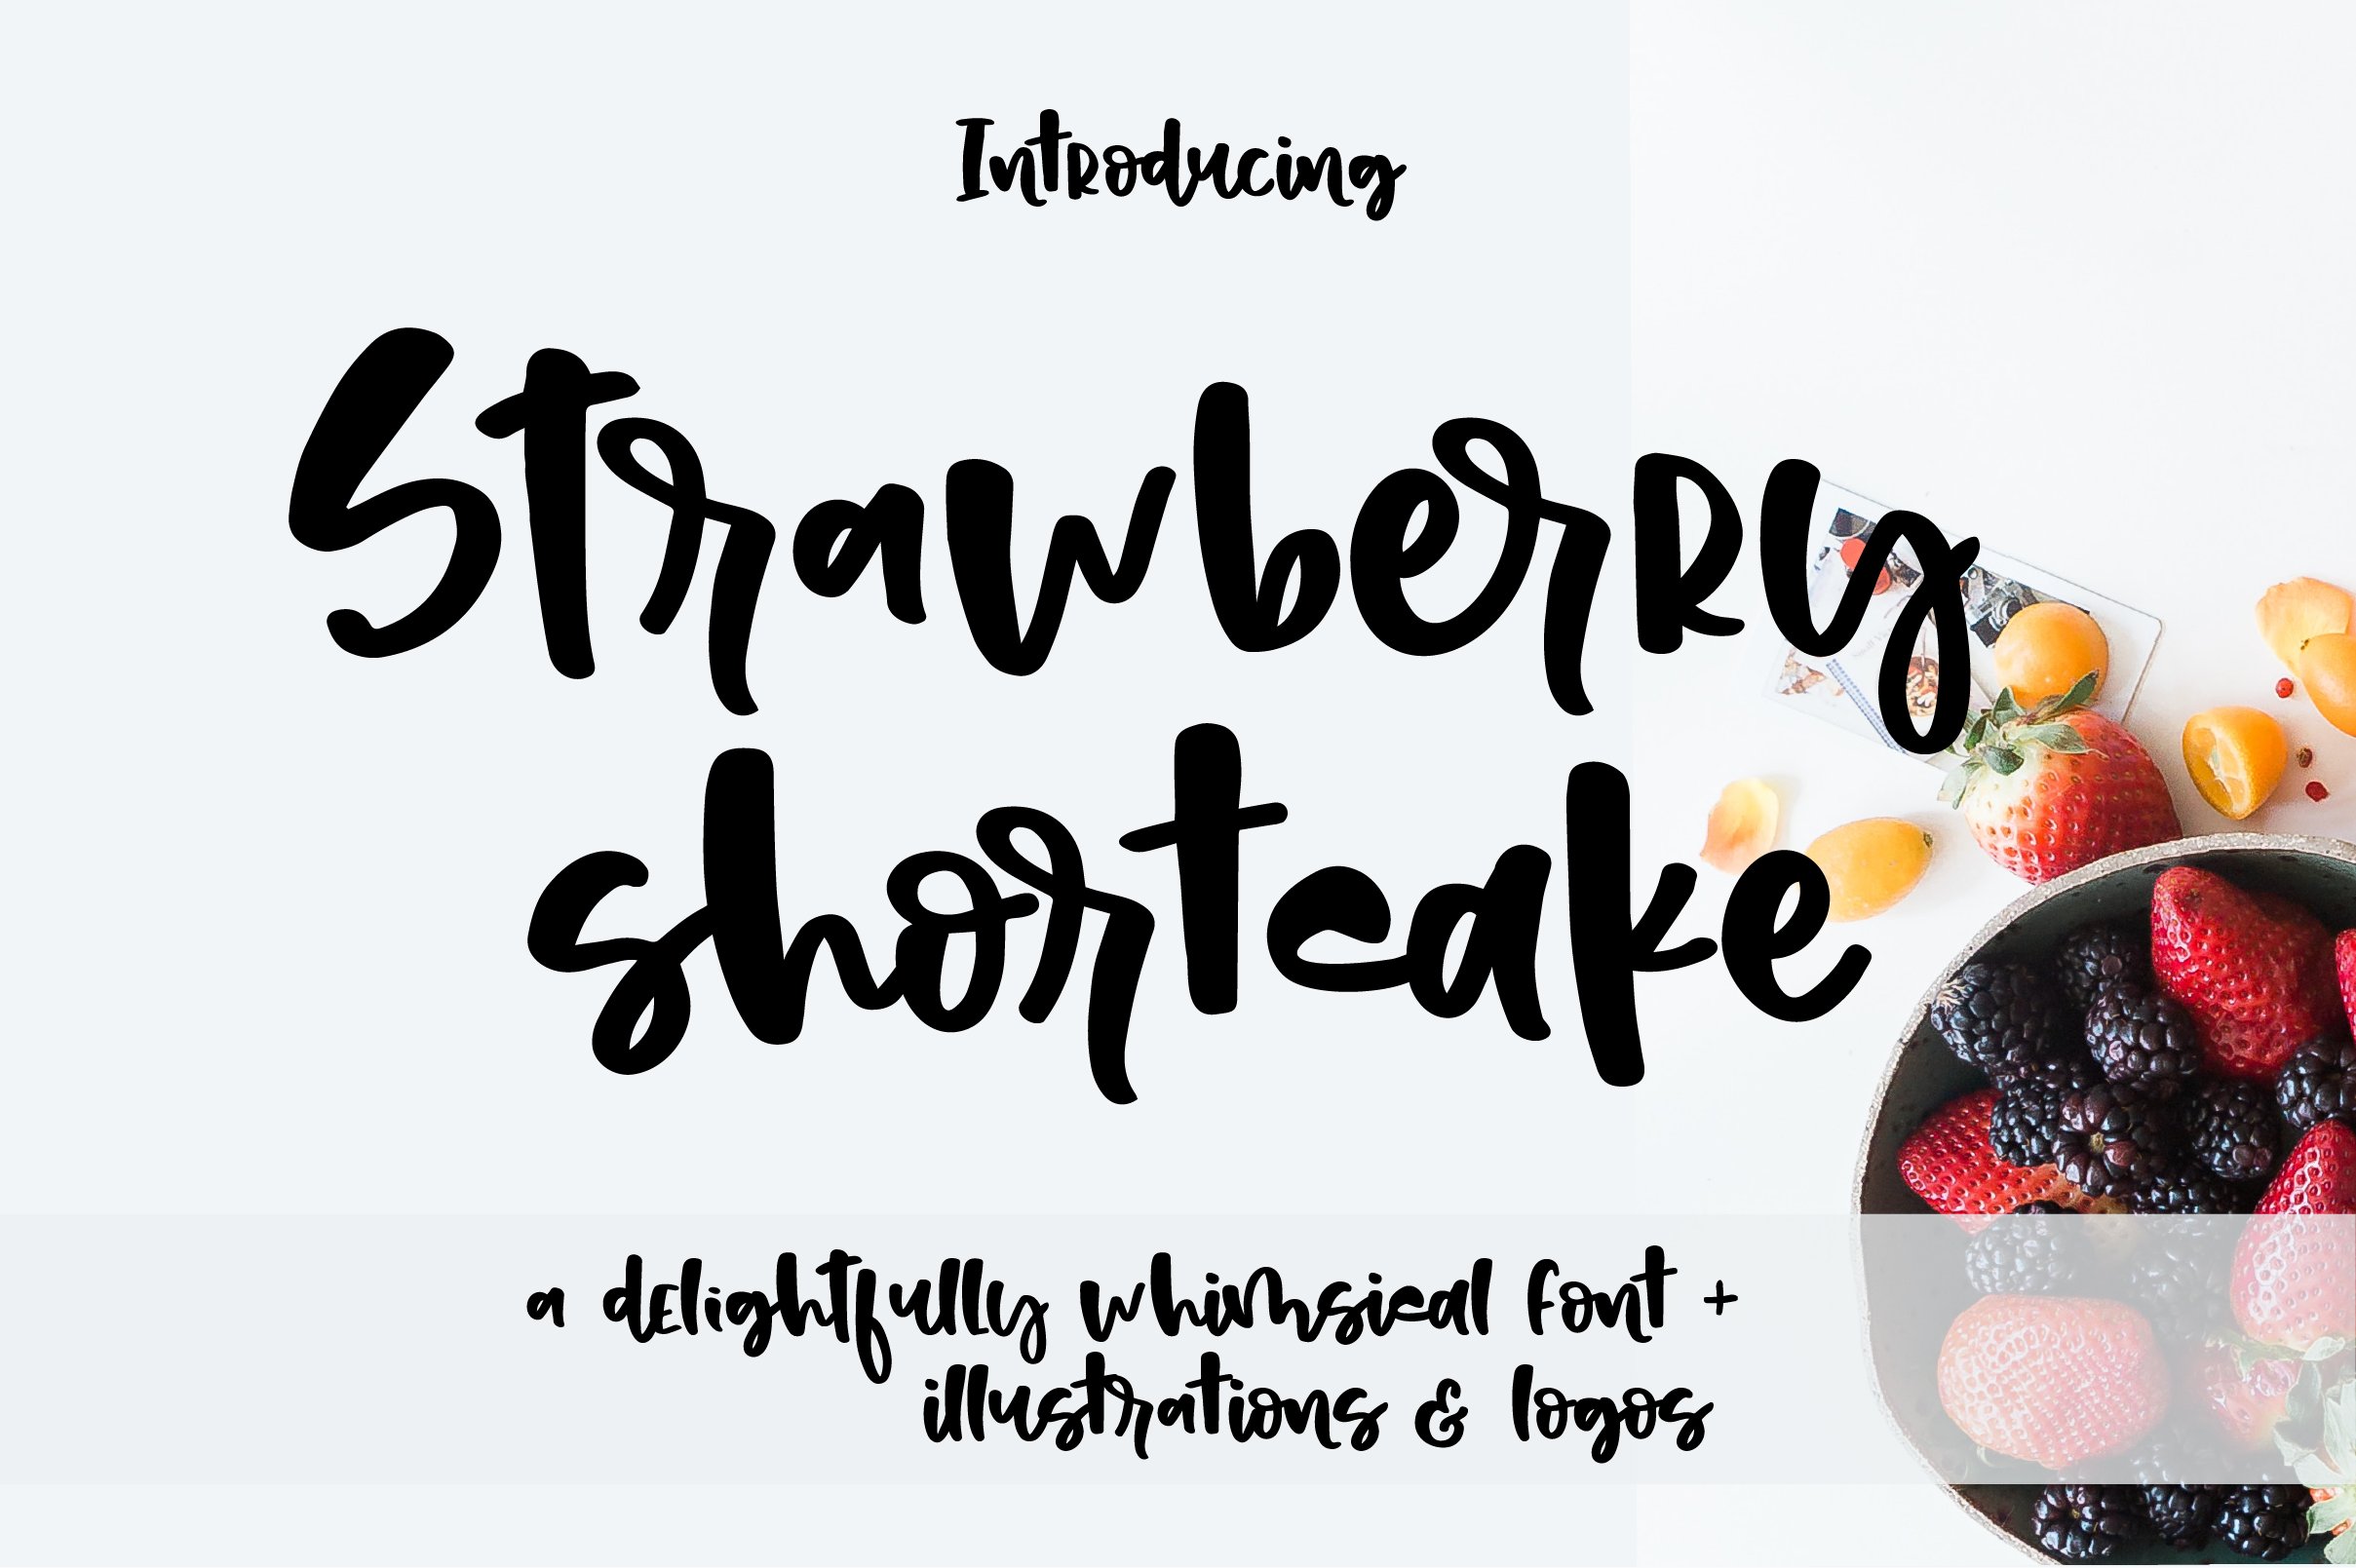 Strawberry Shortcake Font & Extras cover image.